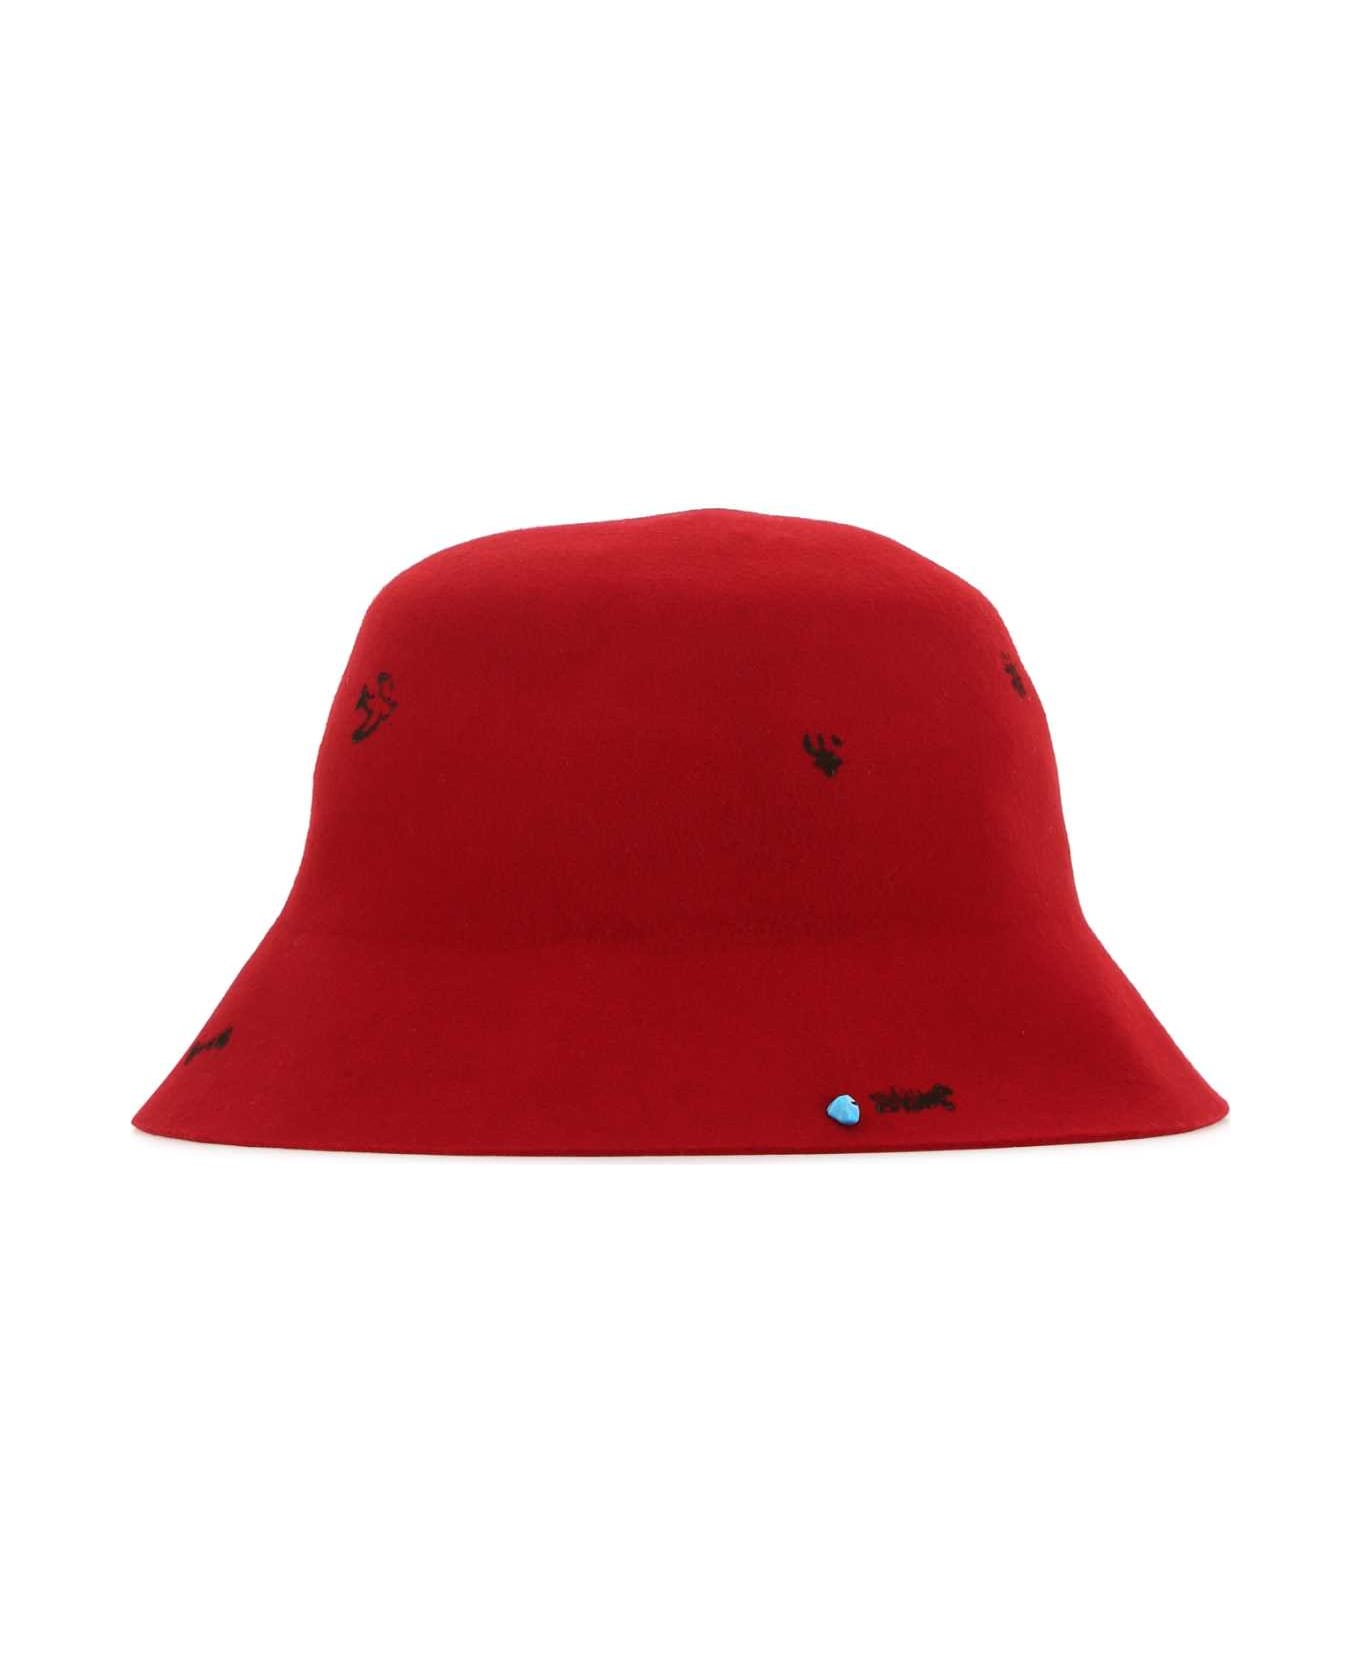 Super Duper Hats Red Felt Freya Bucket Hat - IBISCO 帽子